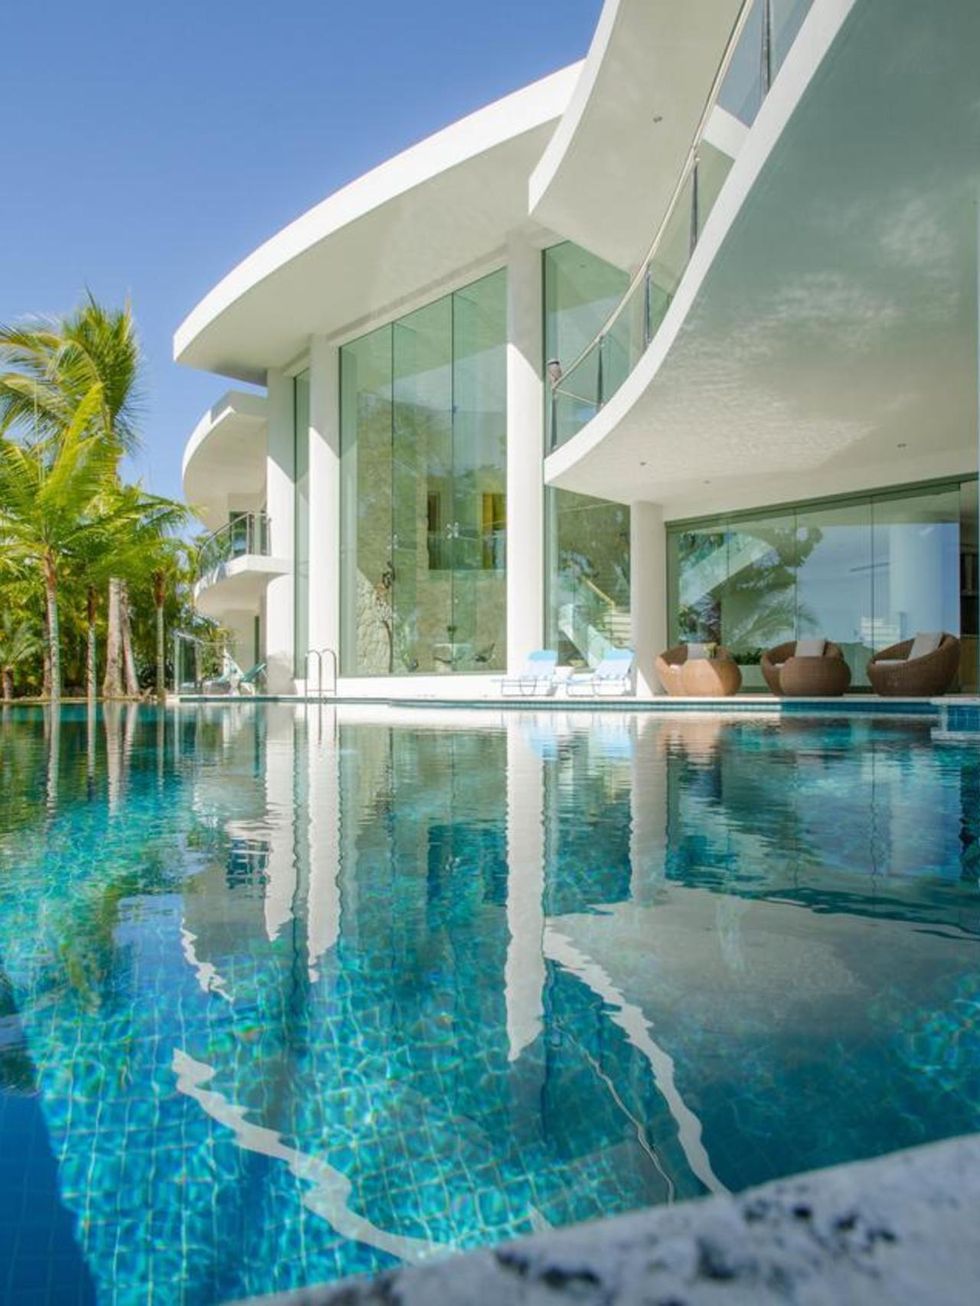 Swimming pool, Property, Reflection, Real estate, Resort, Azure, Villa, Aqua, Composite material, Tile, 